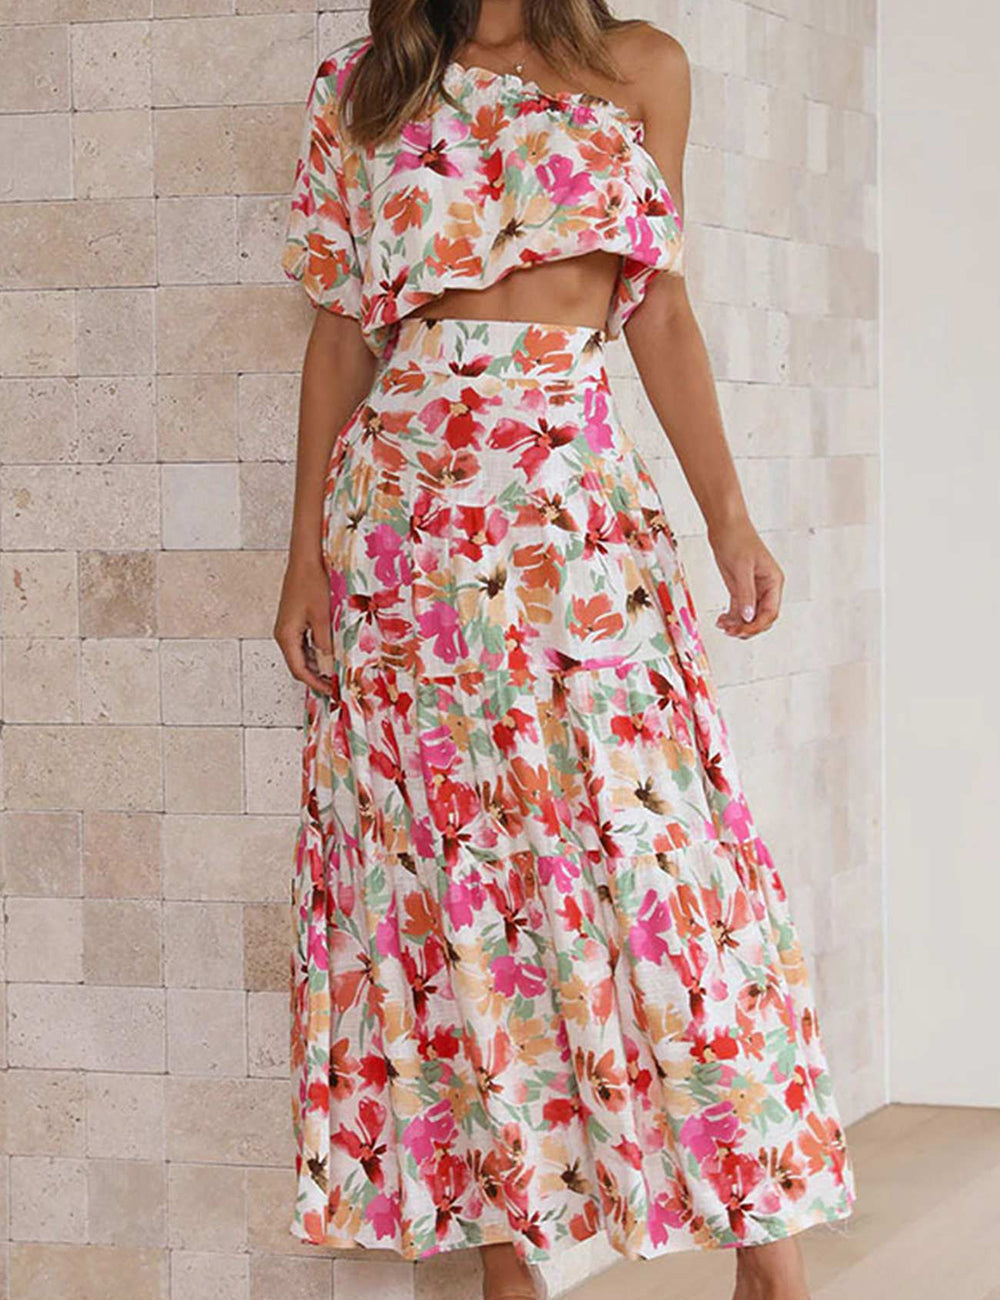 Blumendruck One Shoulder Crop Top Tiered Skirt Suits